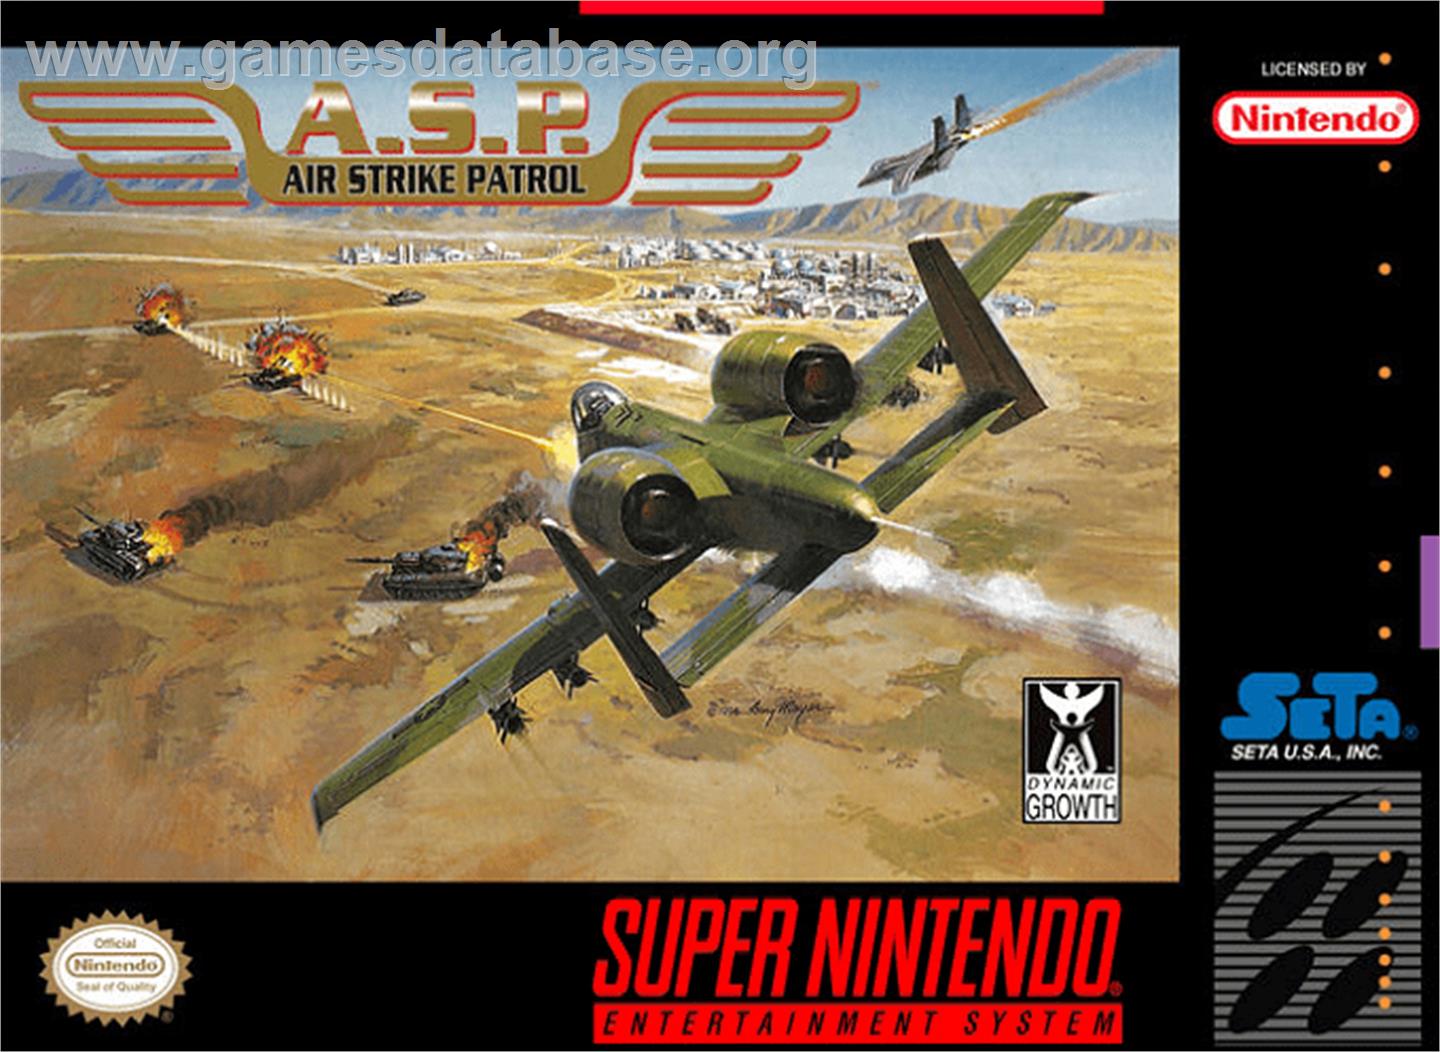 A.S.P.: Air Strike Patrol - Nintendo SNES - Artwork - Box